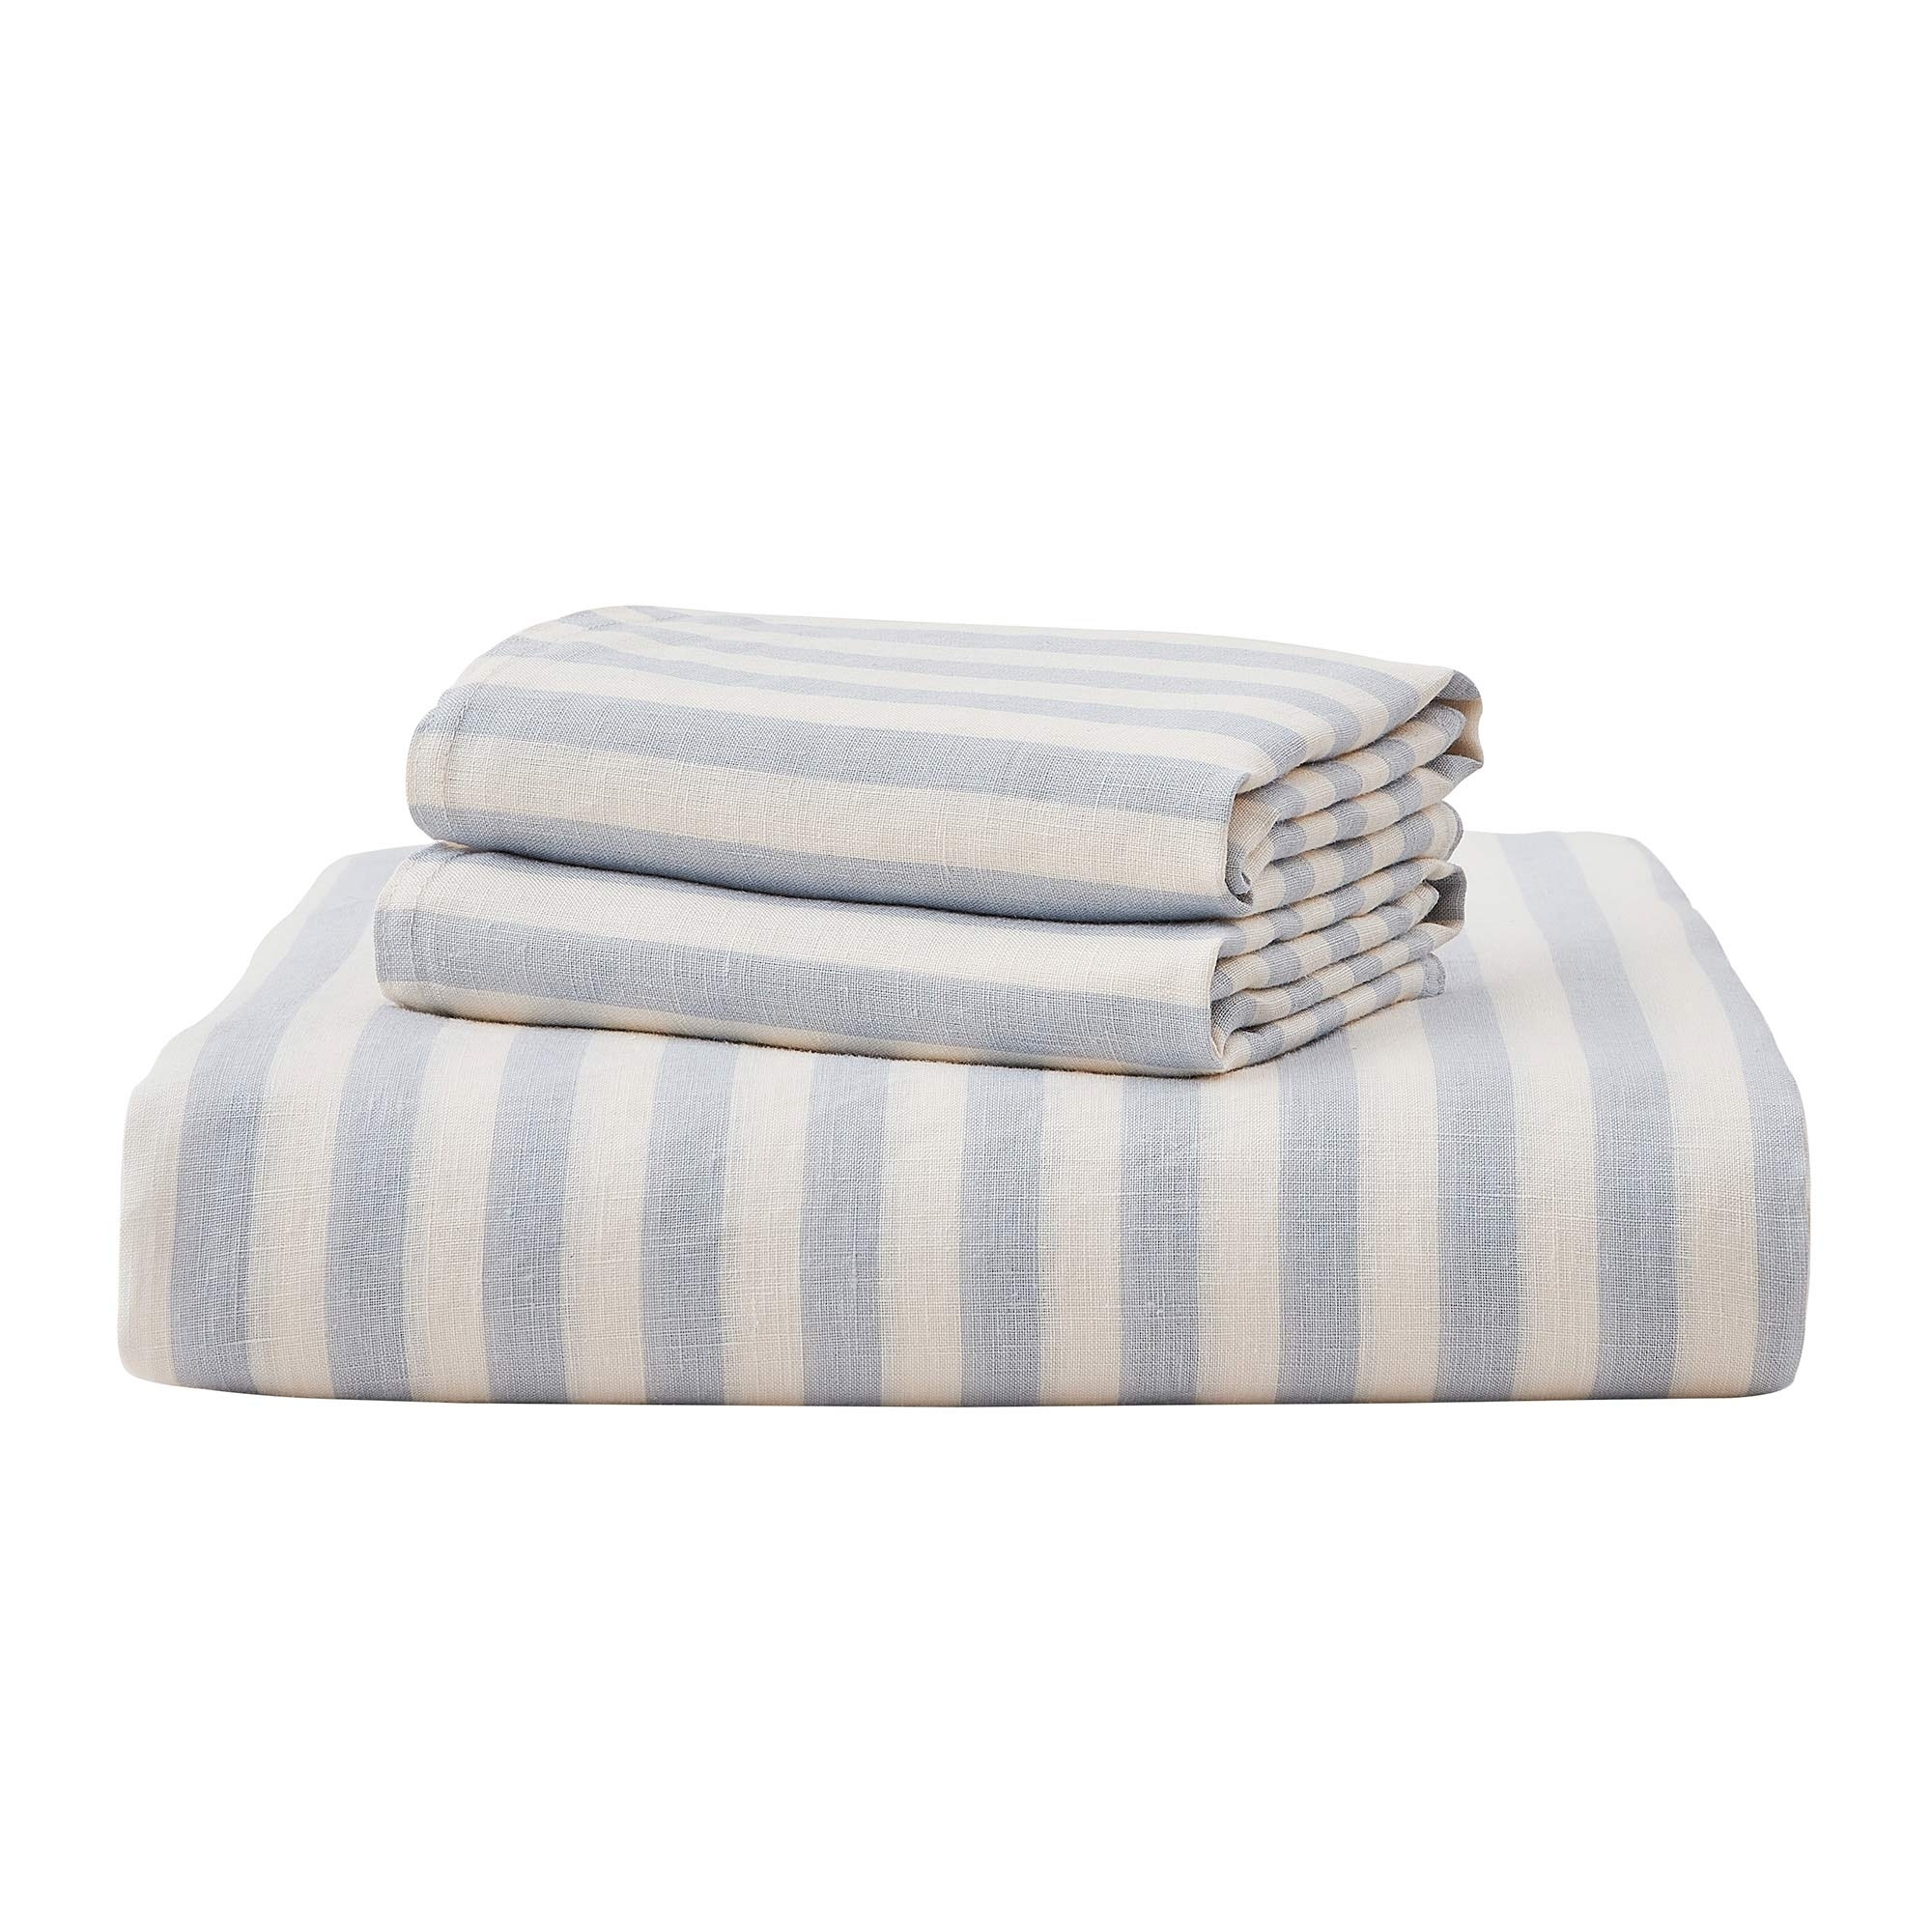 King Size Washed Linen Duvet Cover With Shams, Stripe Design, 3 Piece Bedding Duvet Cover Set - Light Gray